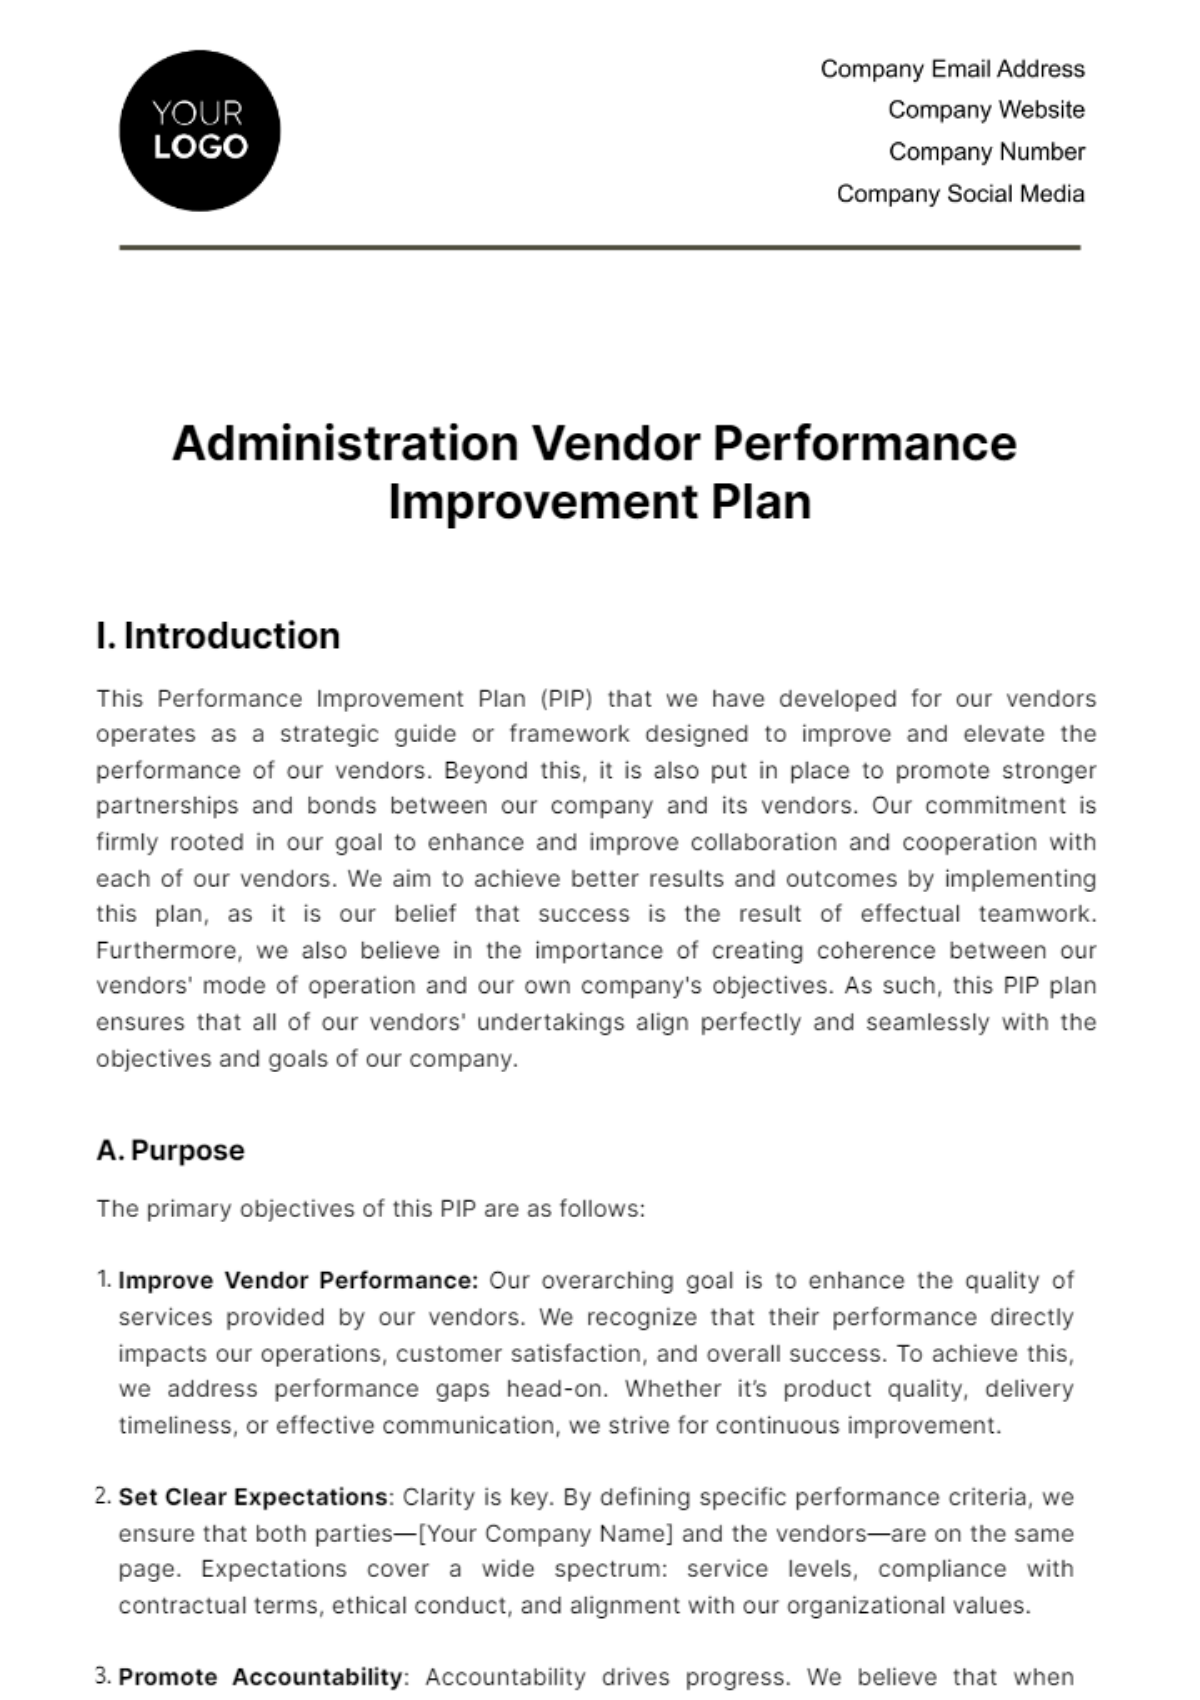 Free Administration Vendor Performance Improvement Plan Template